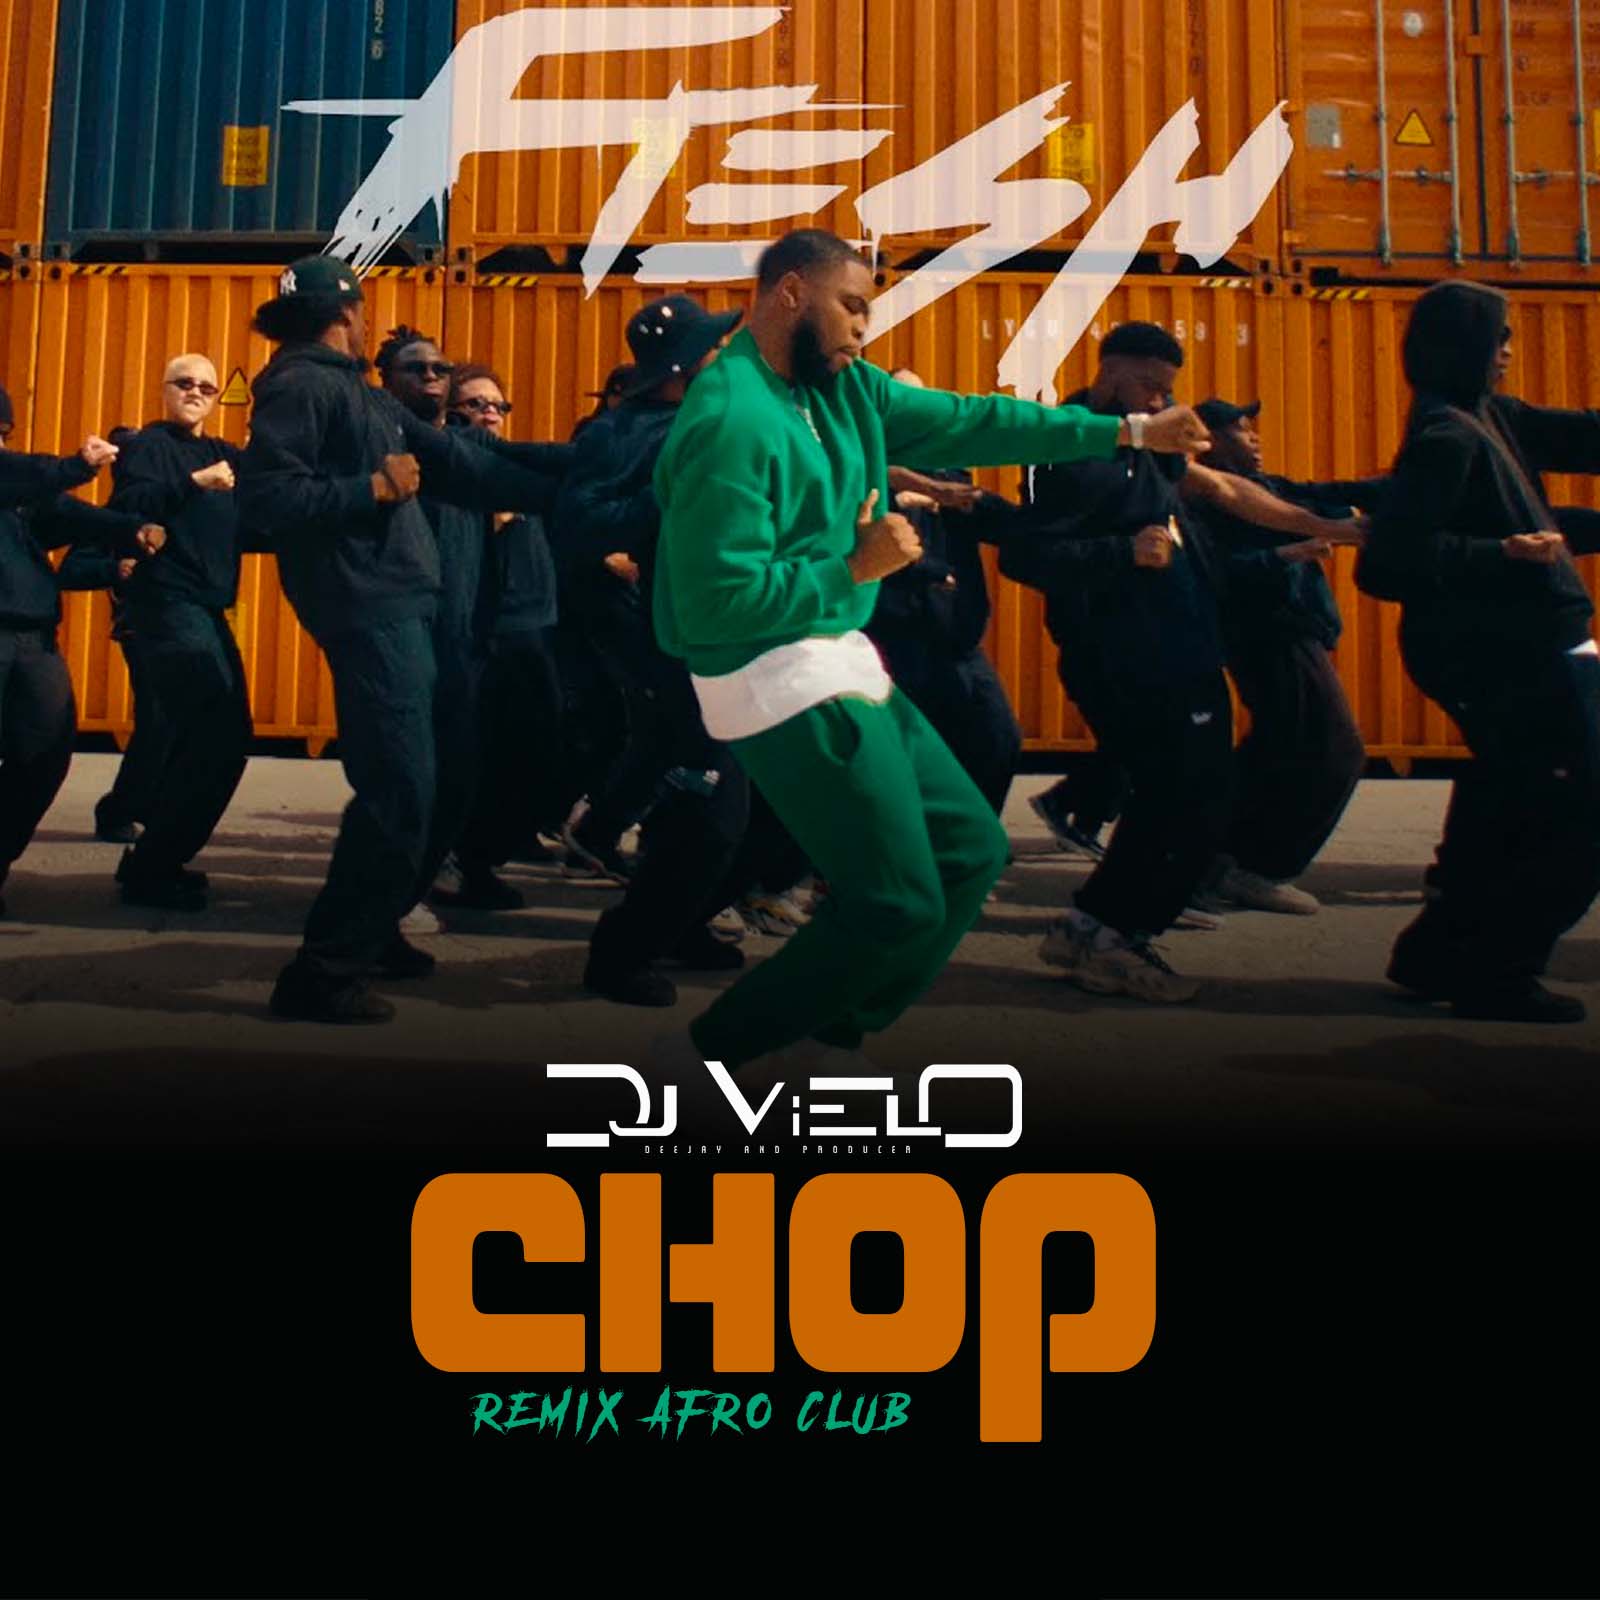 Sii mai Dj Vielo X Fresh - Chop Remix Afro Club DISPO SUR SPOTIFY, DEEZER, APPLE MUSIC